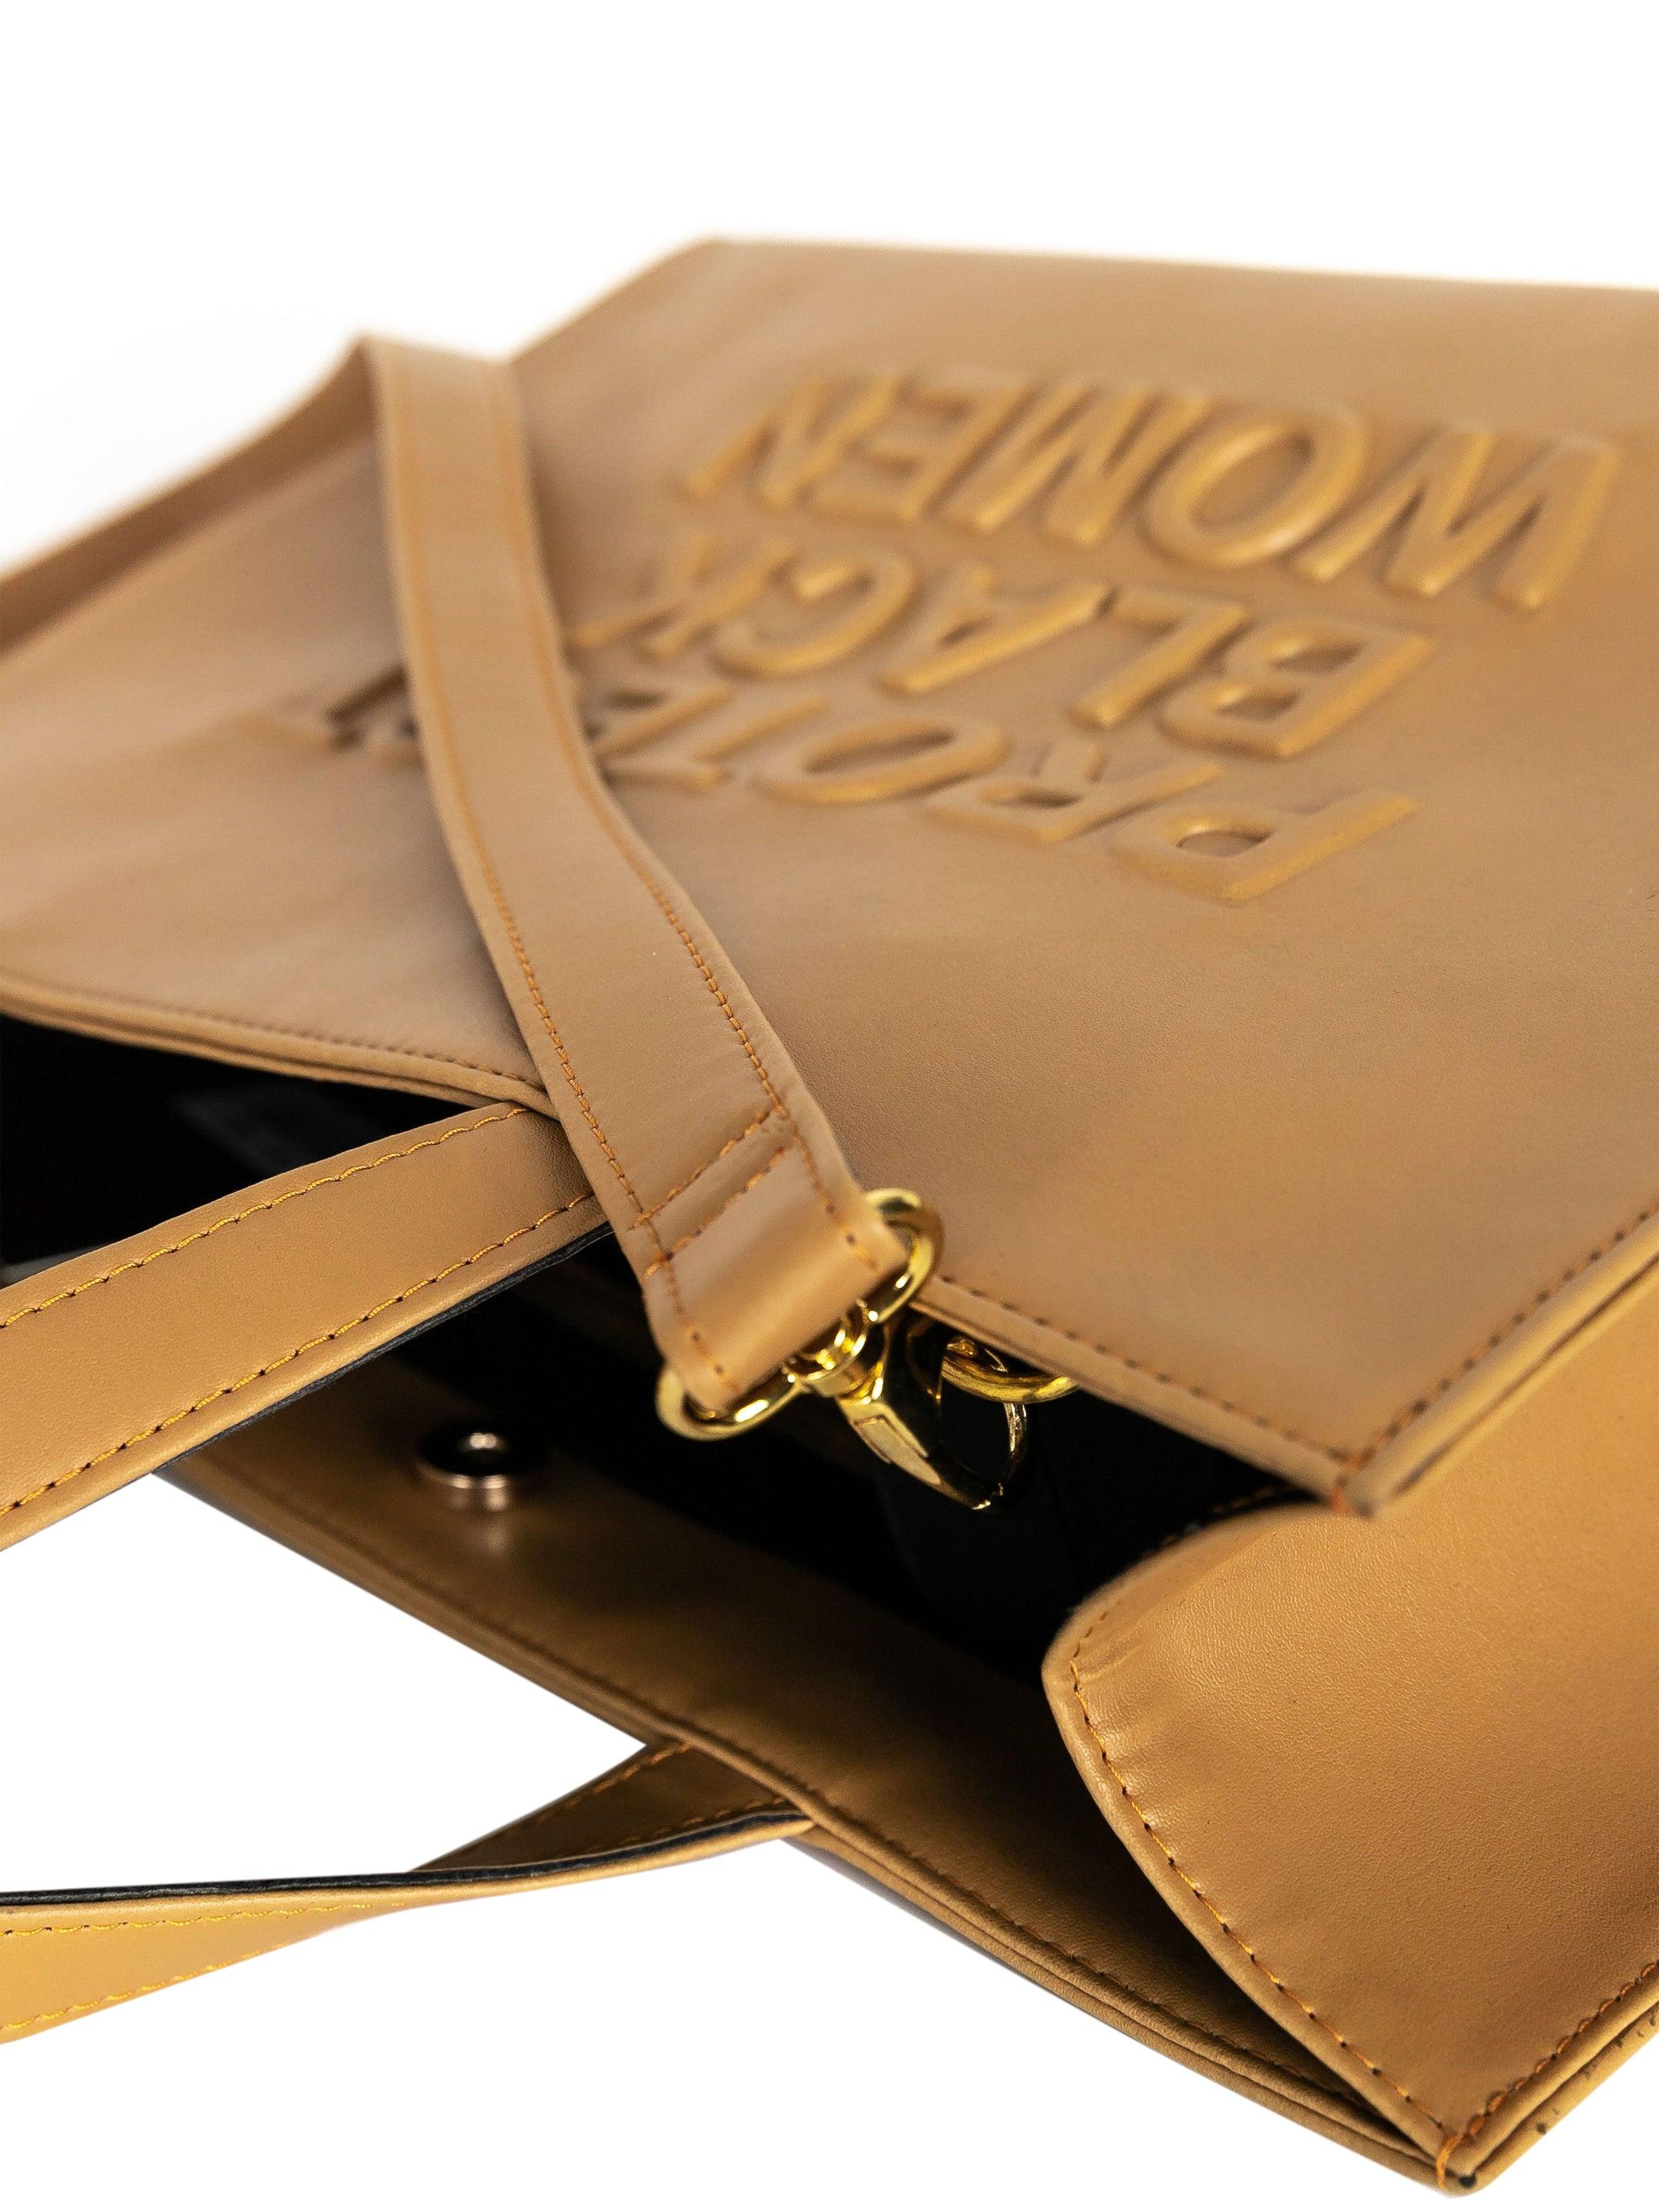 PBW - Vegan Leather Mini Bag (Cherry Blossom) | CISE